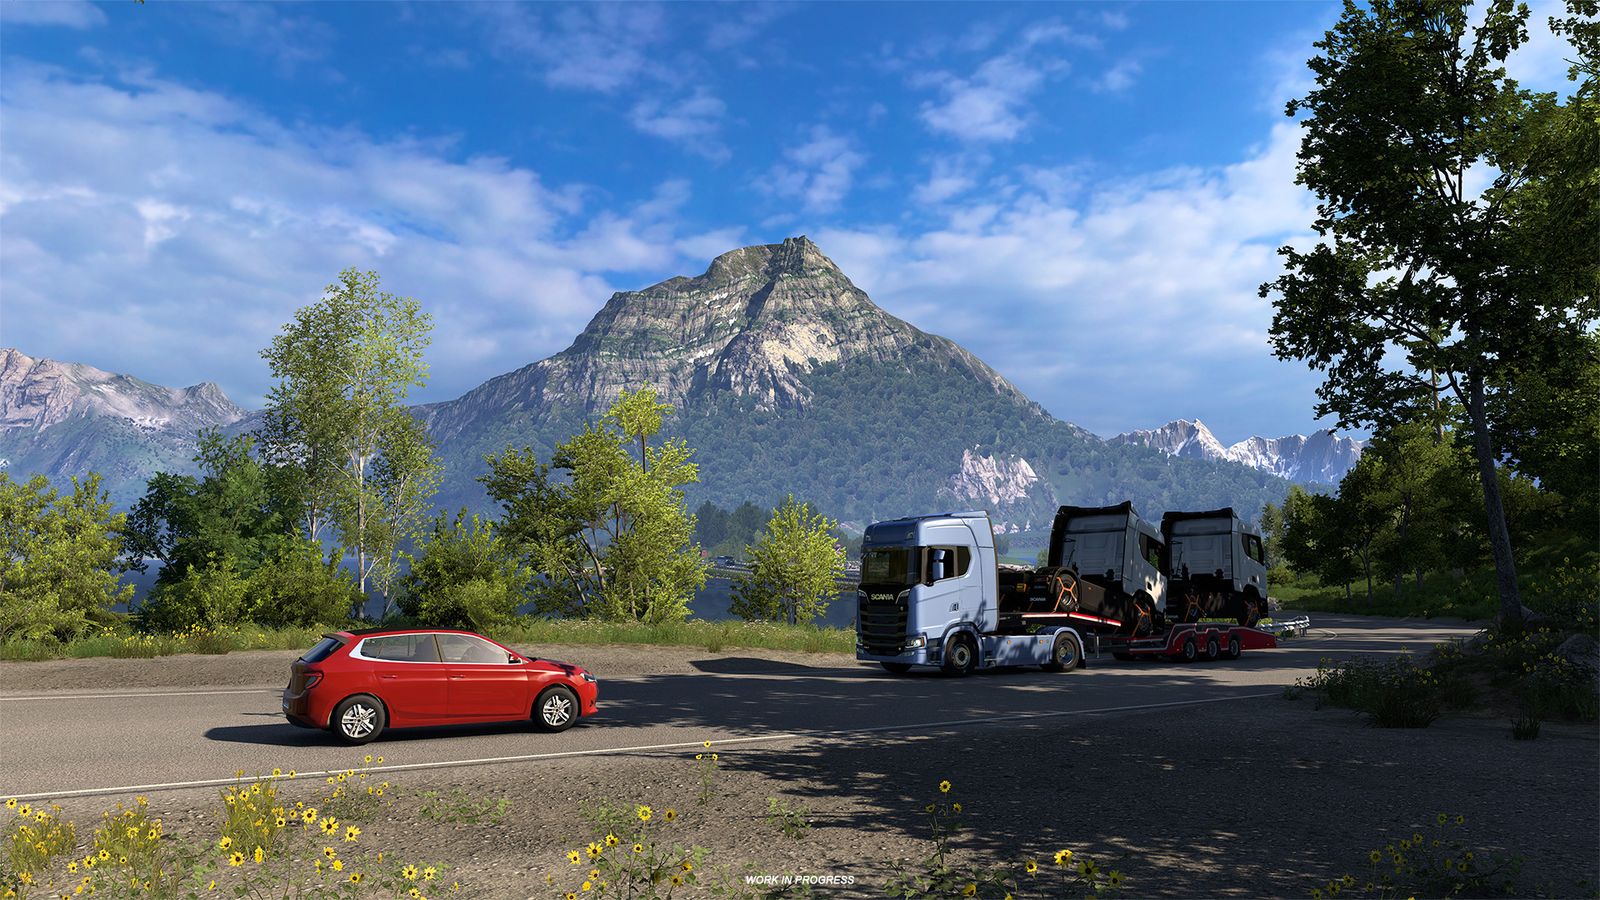 Euro Truck Simulator 2 Nordic Horizons DLC revealed